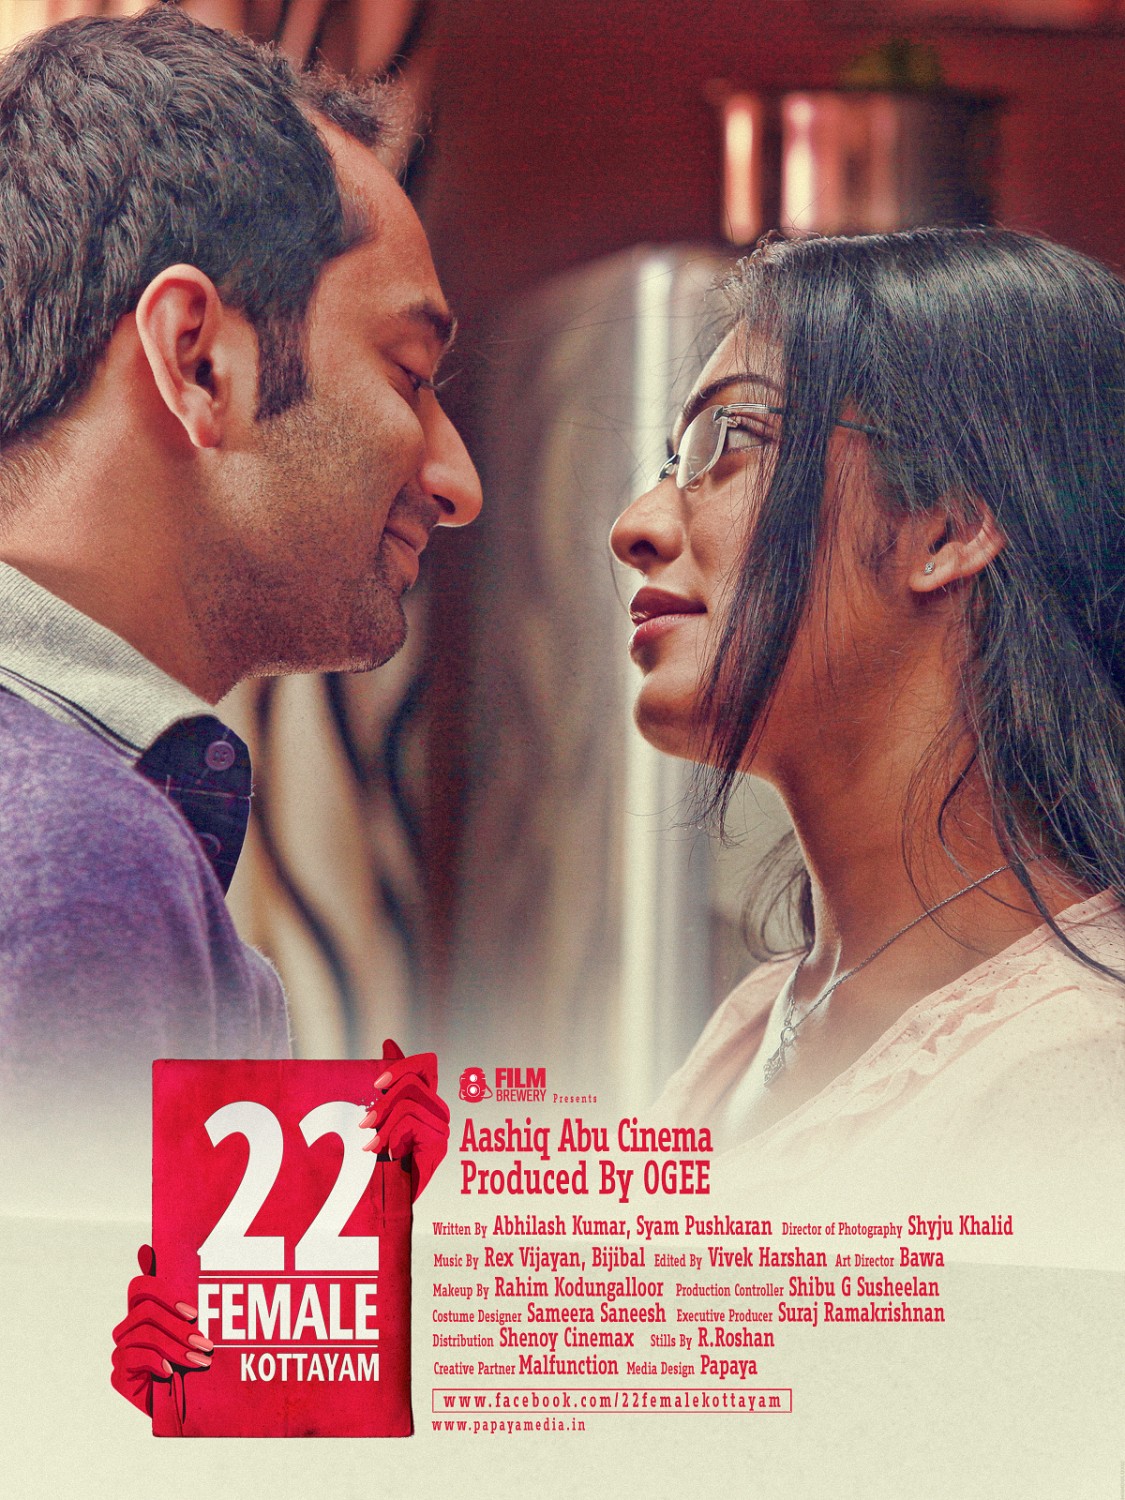 Extra Large Movie Poster Image for 22 Female Kottayam (#9 of 28)